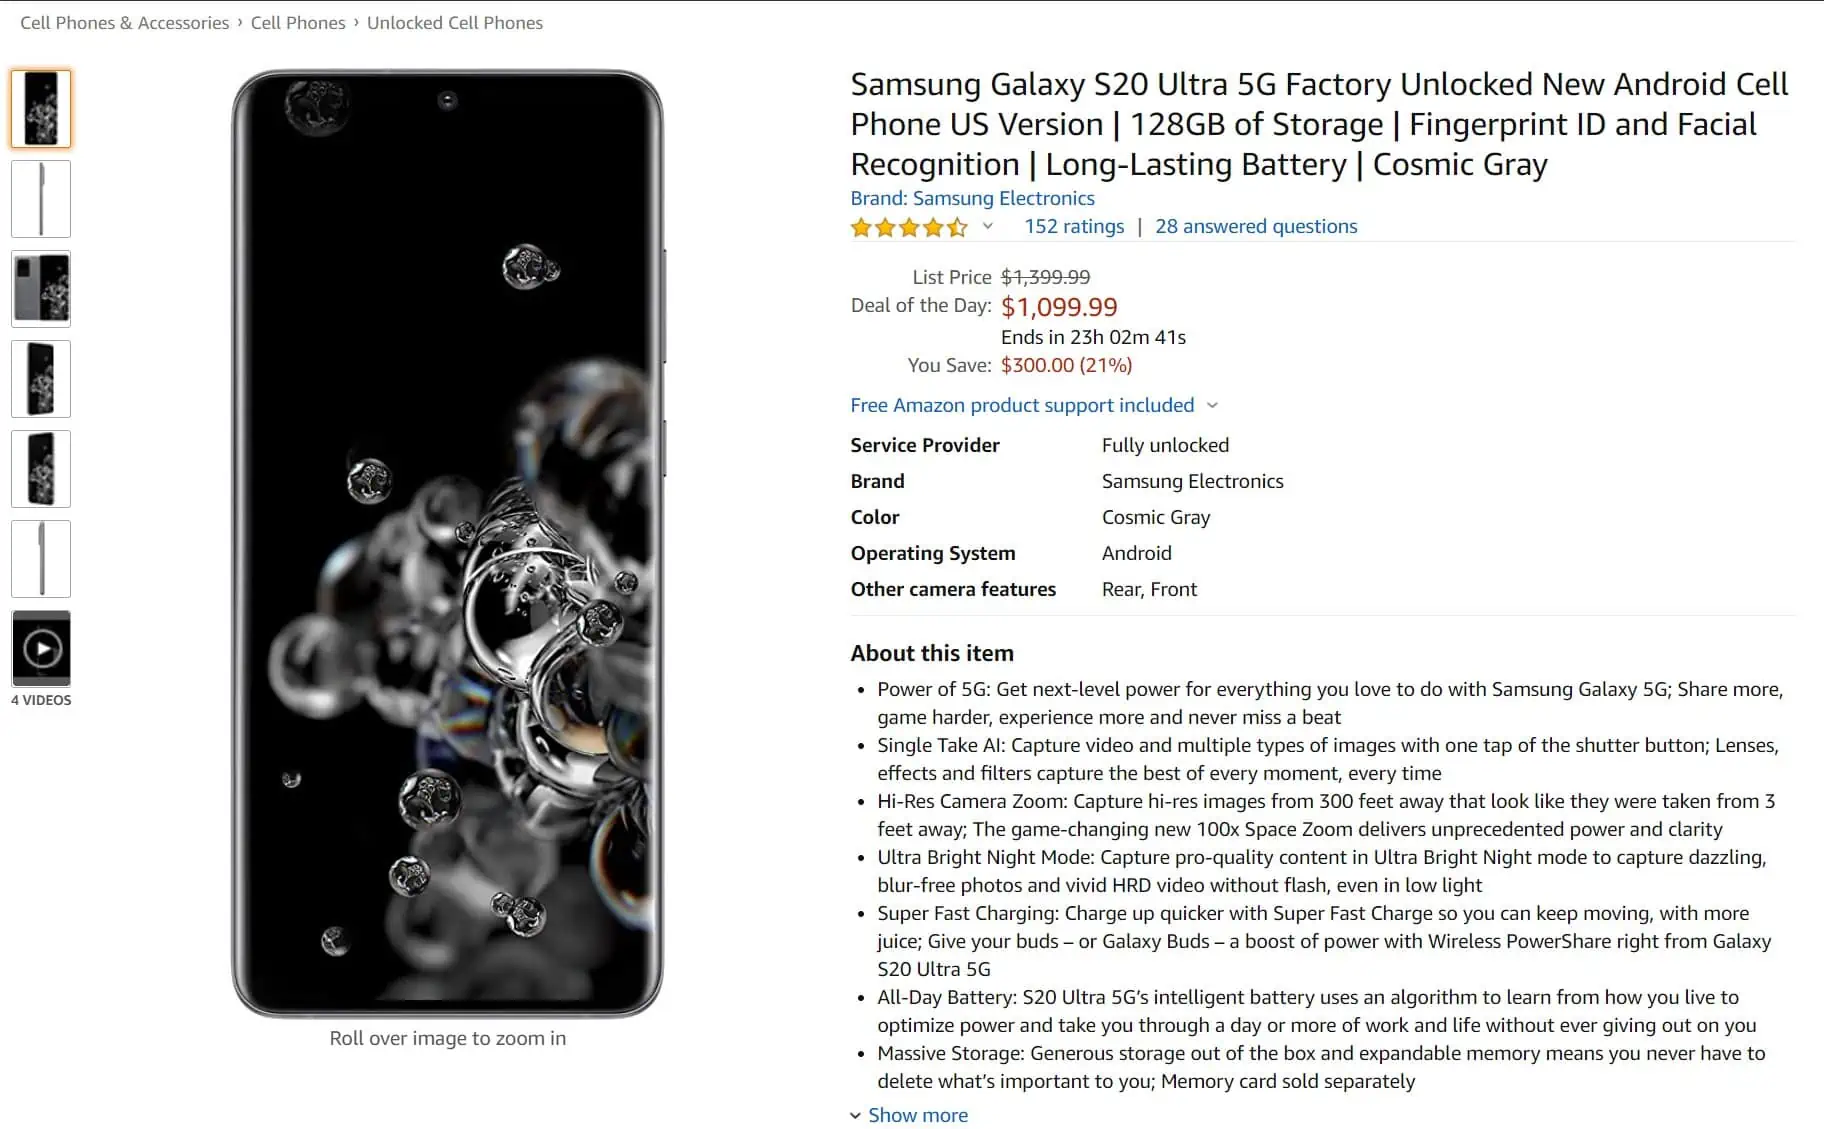  Samsung Galaxy S20 Ultra 5G Factory Unlocked New